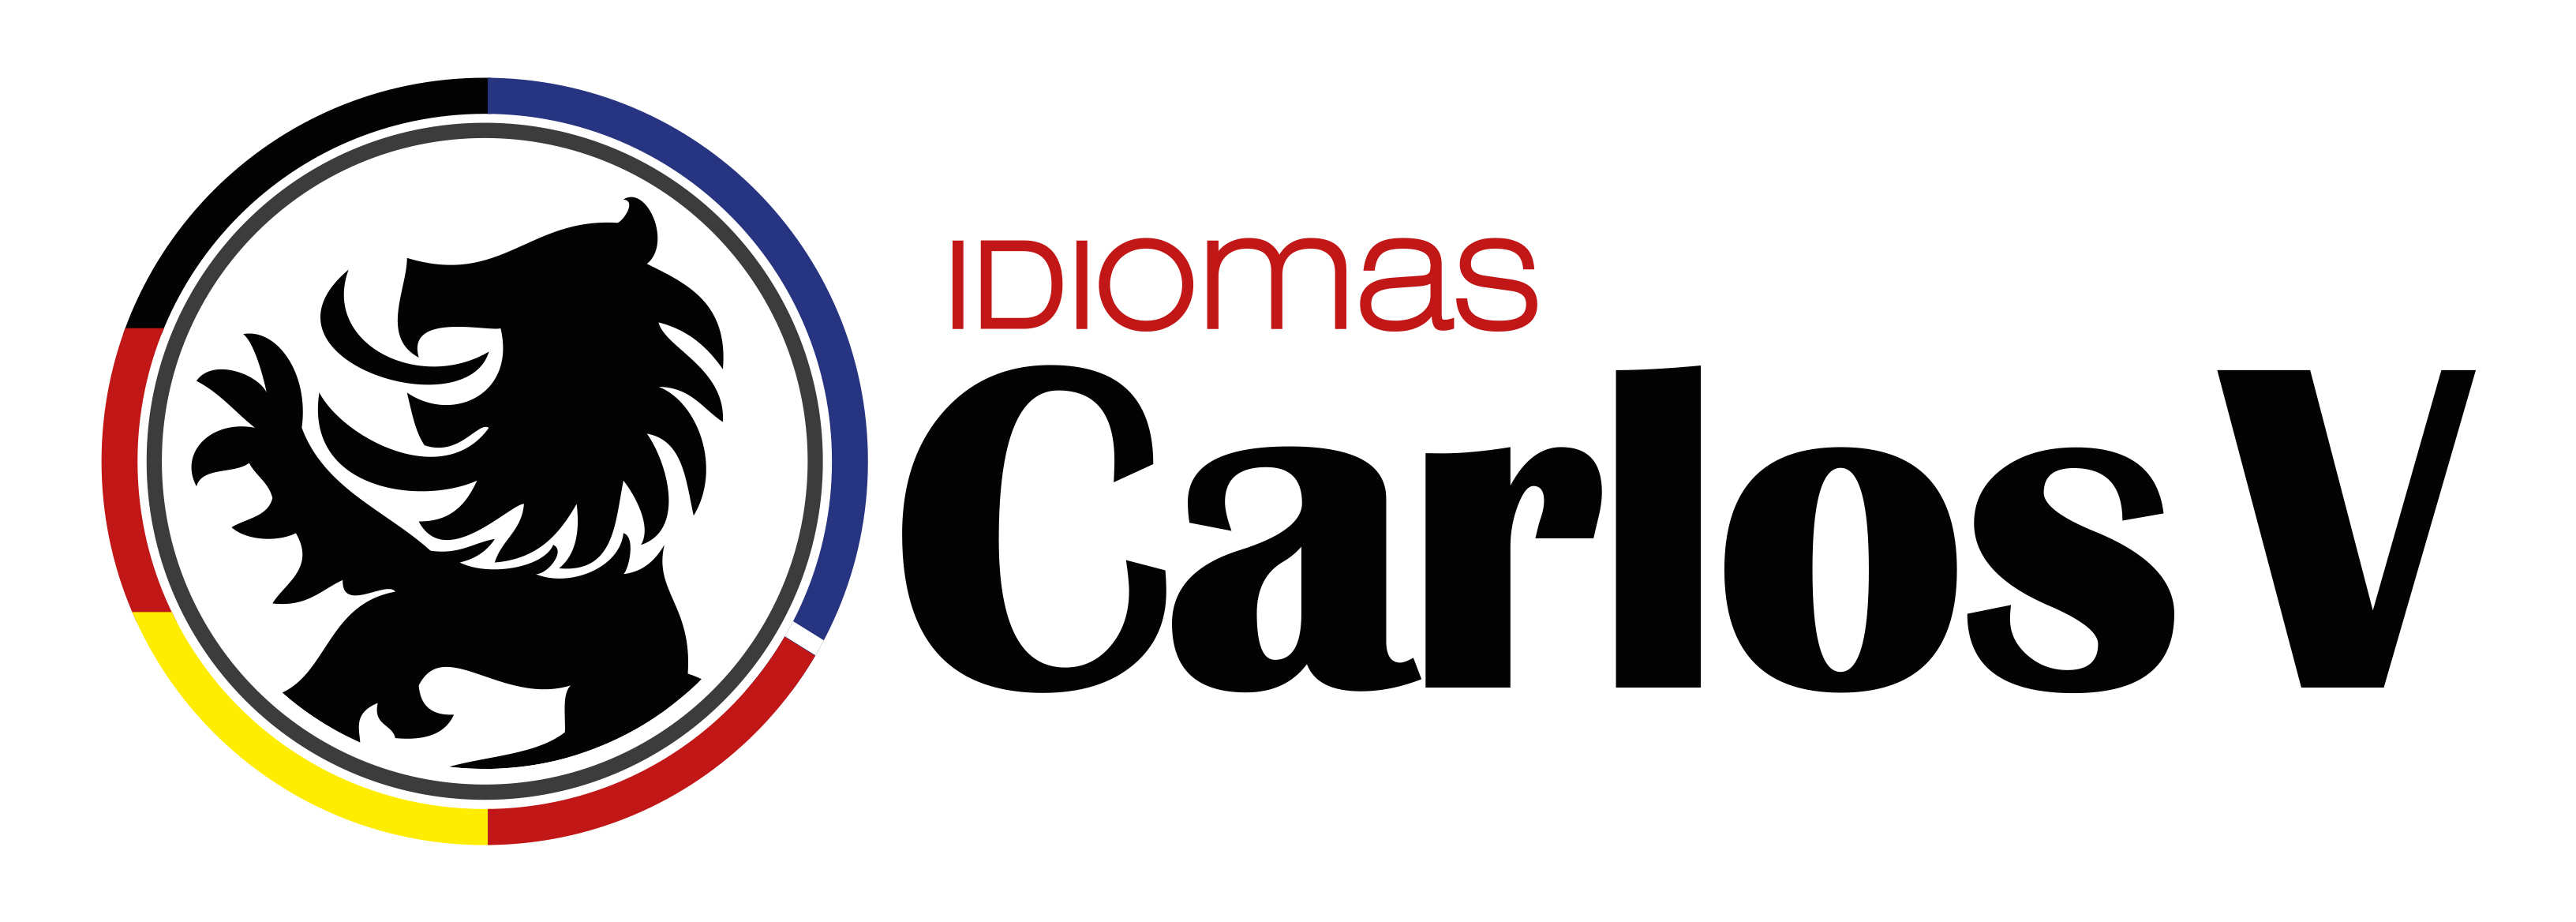 LogoCarlosV-Idiomas.jpg - 568,48 kB